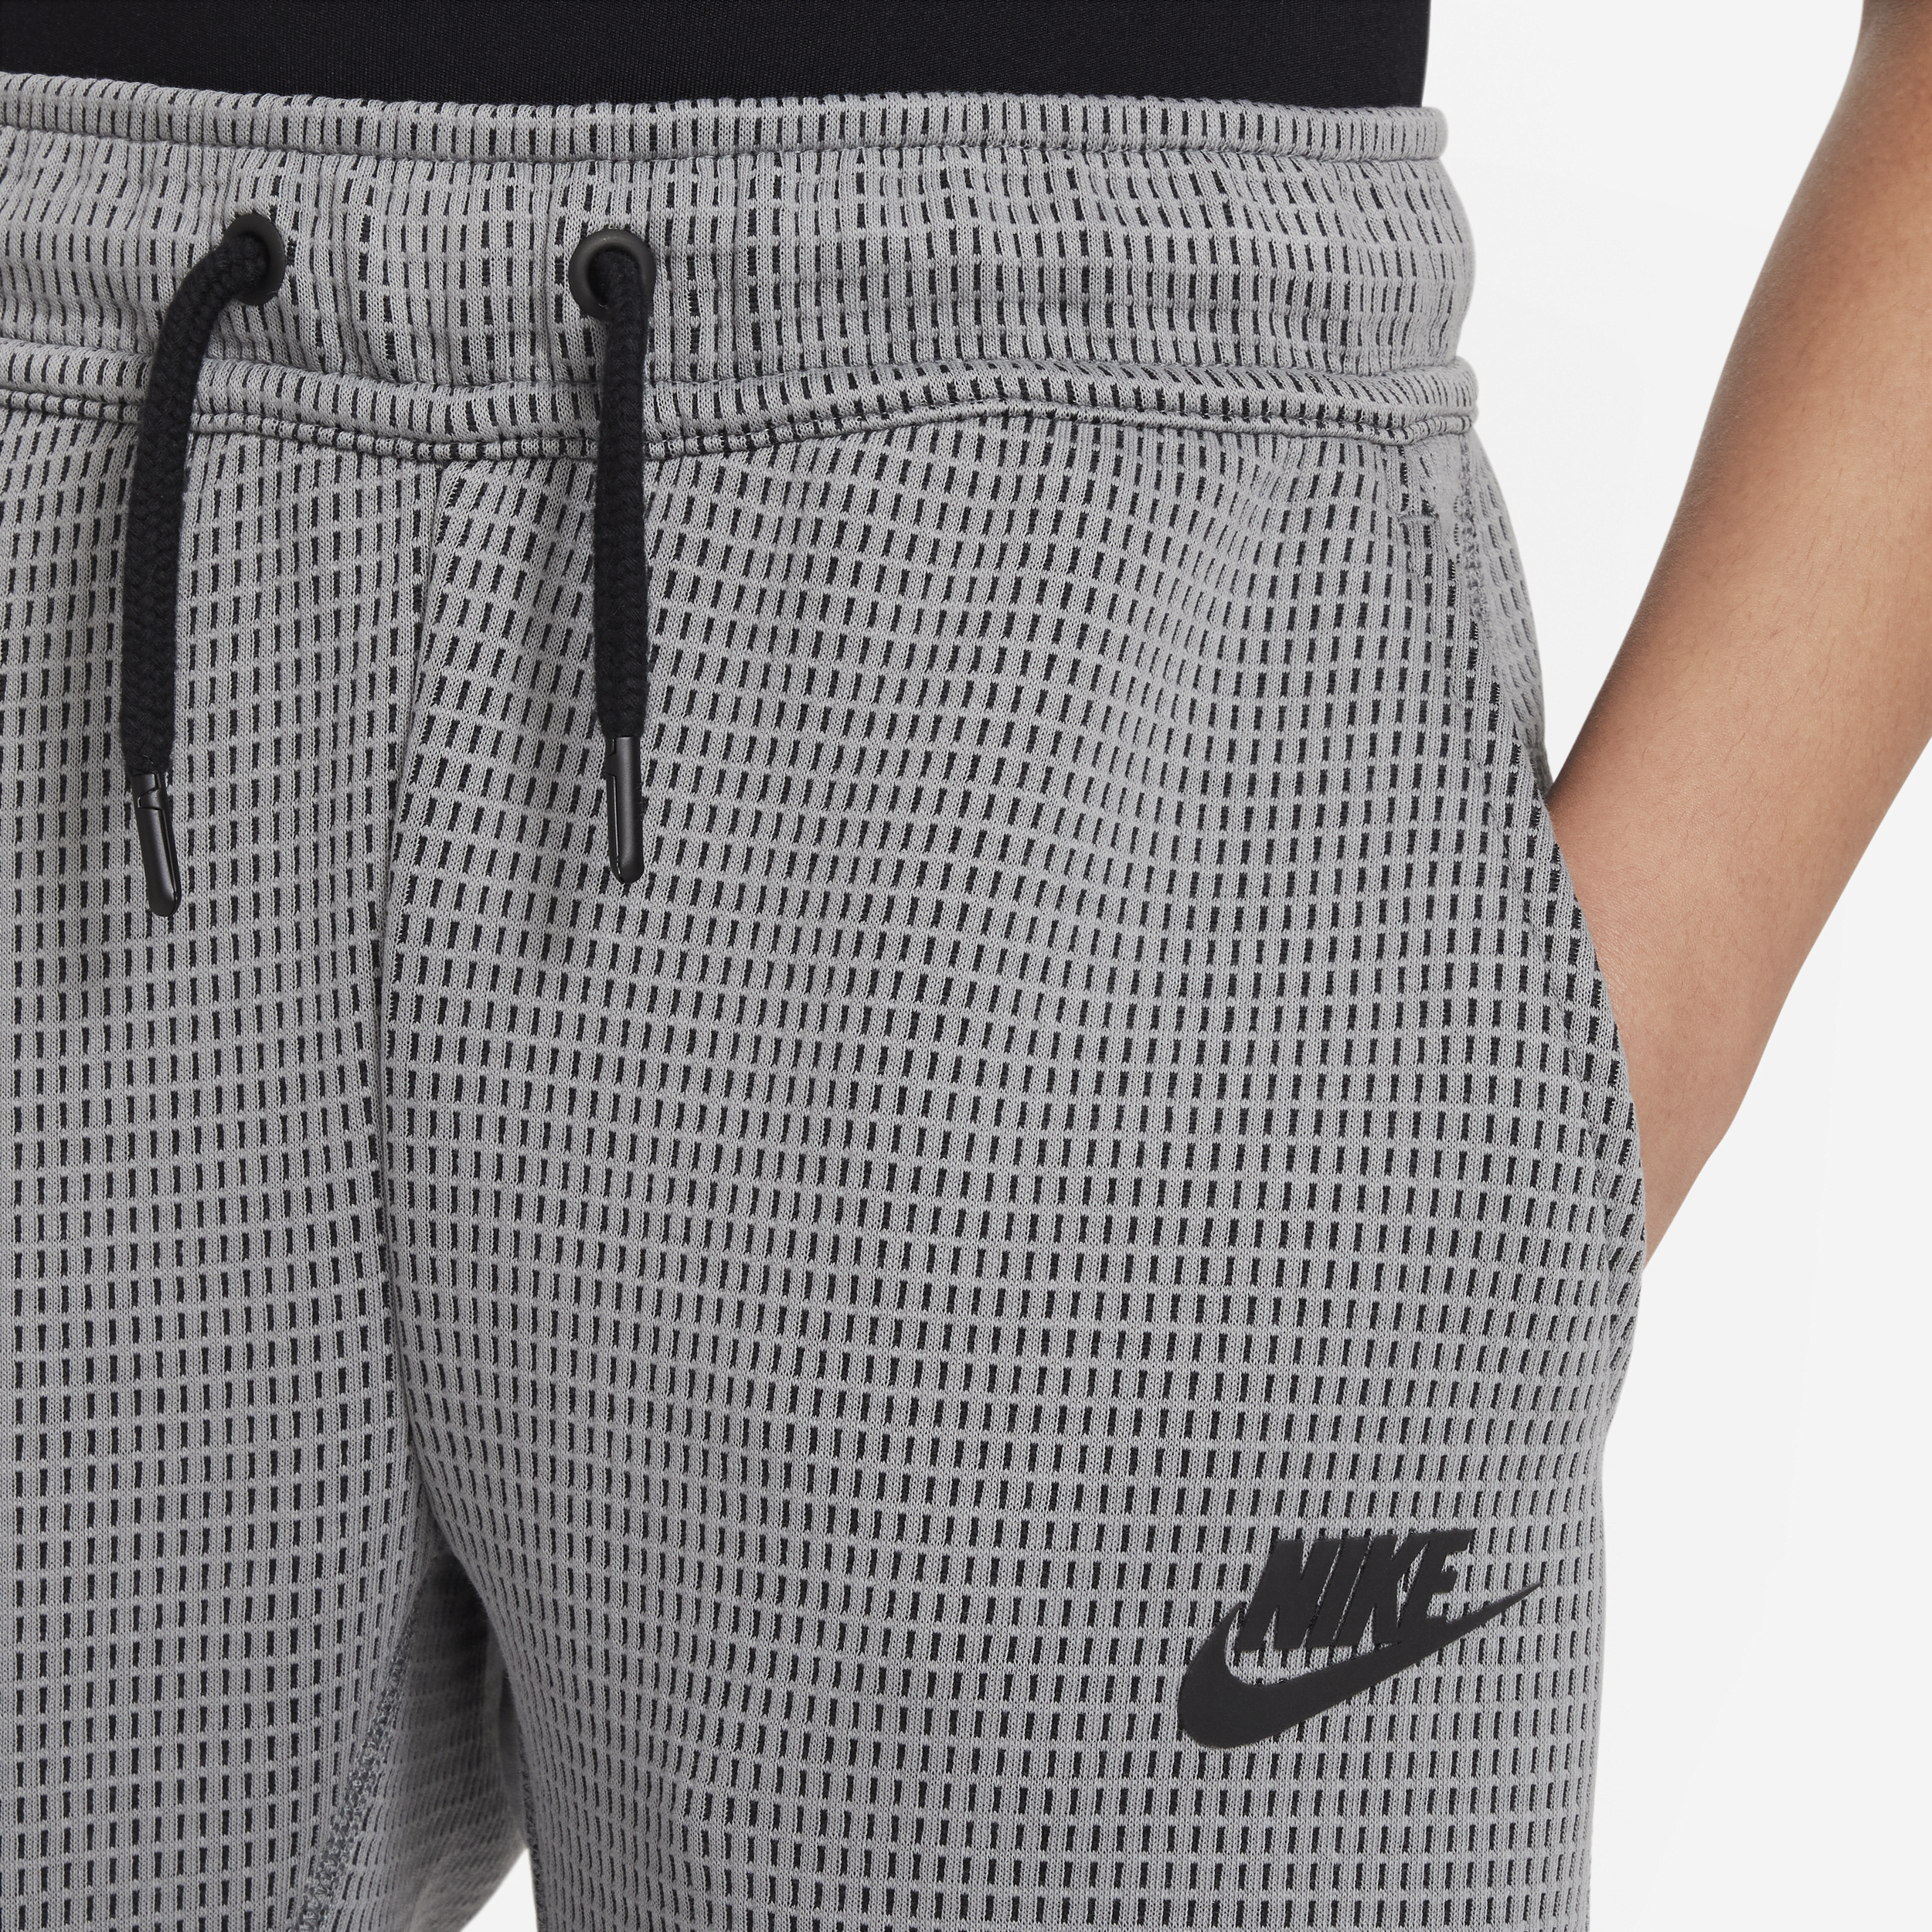 Nike Sportswear Tech Fleece Winterbroek voor jongens Grijs